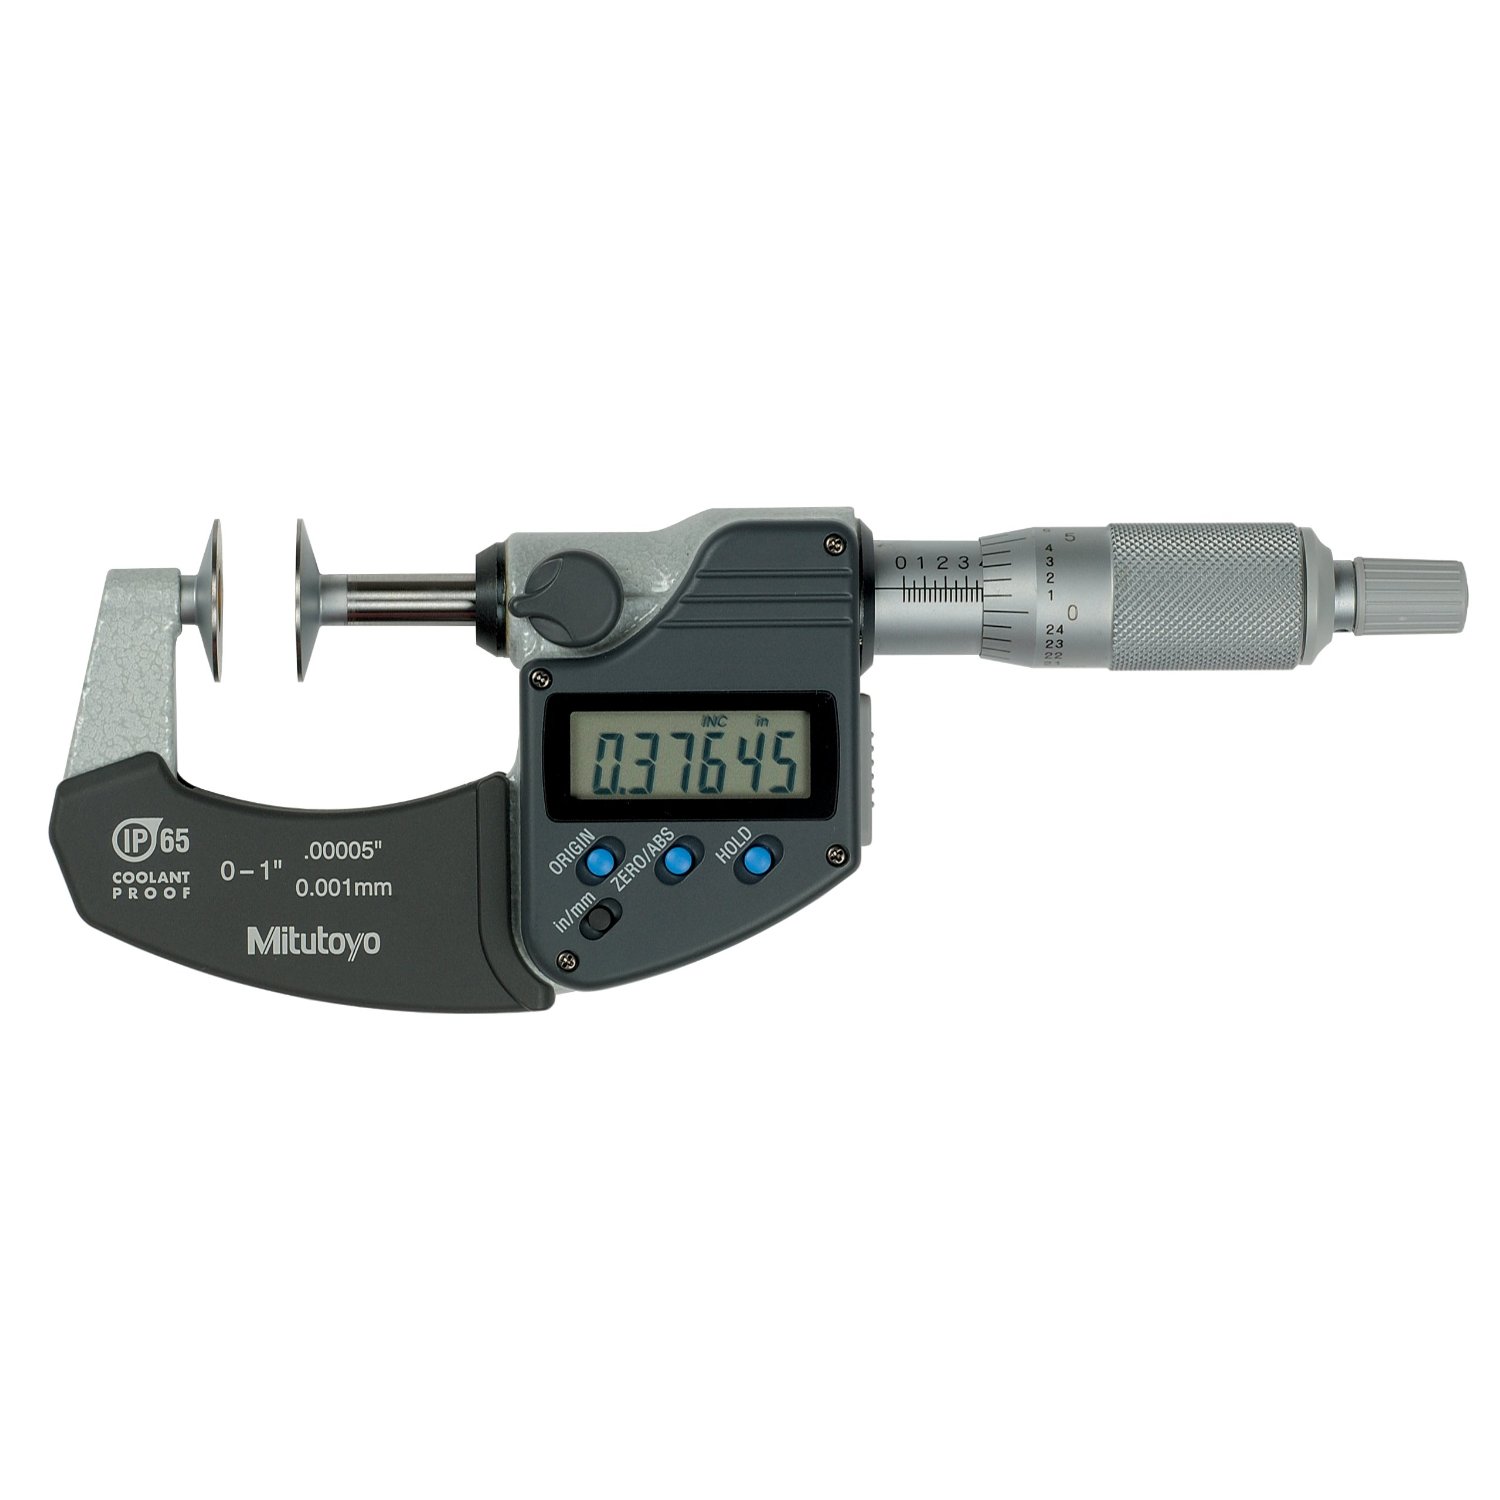 Mitutoyo 323-350 IP65 Digimatic Disk Micrometer